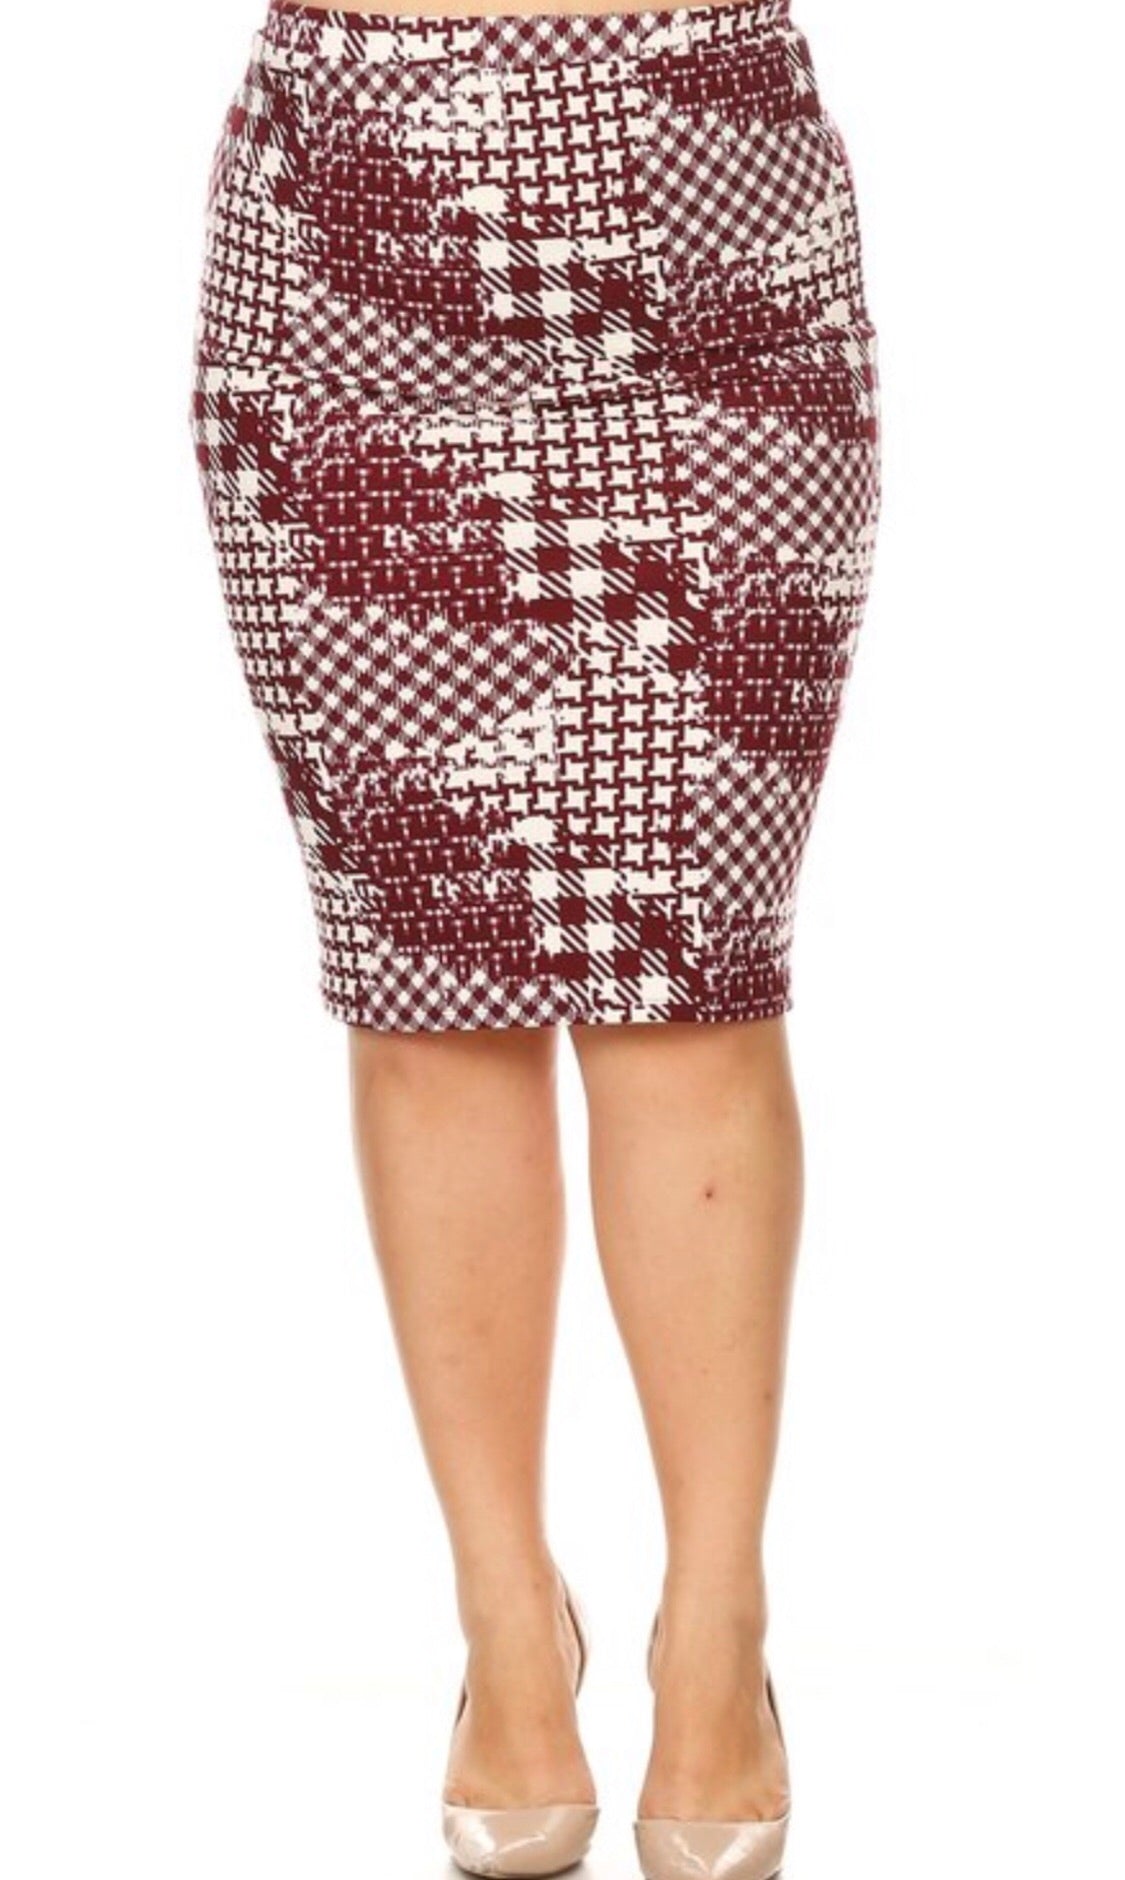 Bella Patterned Skirt